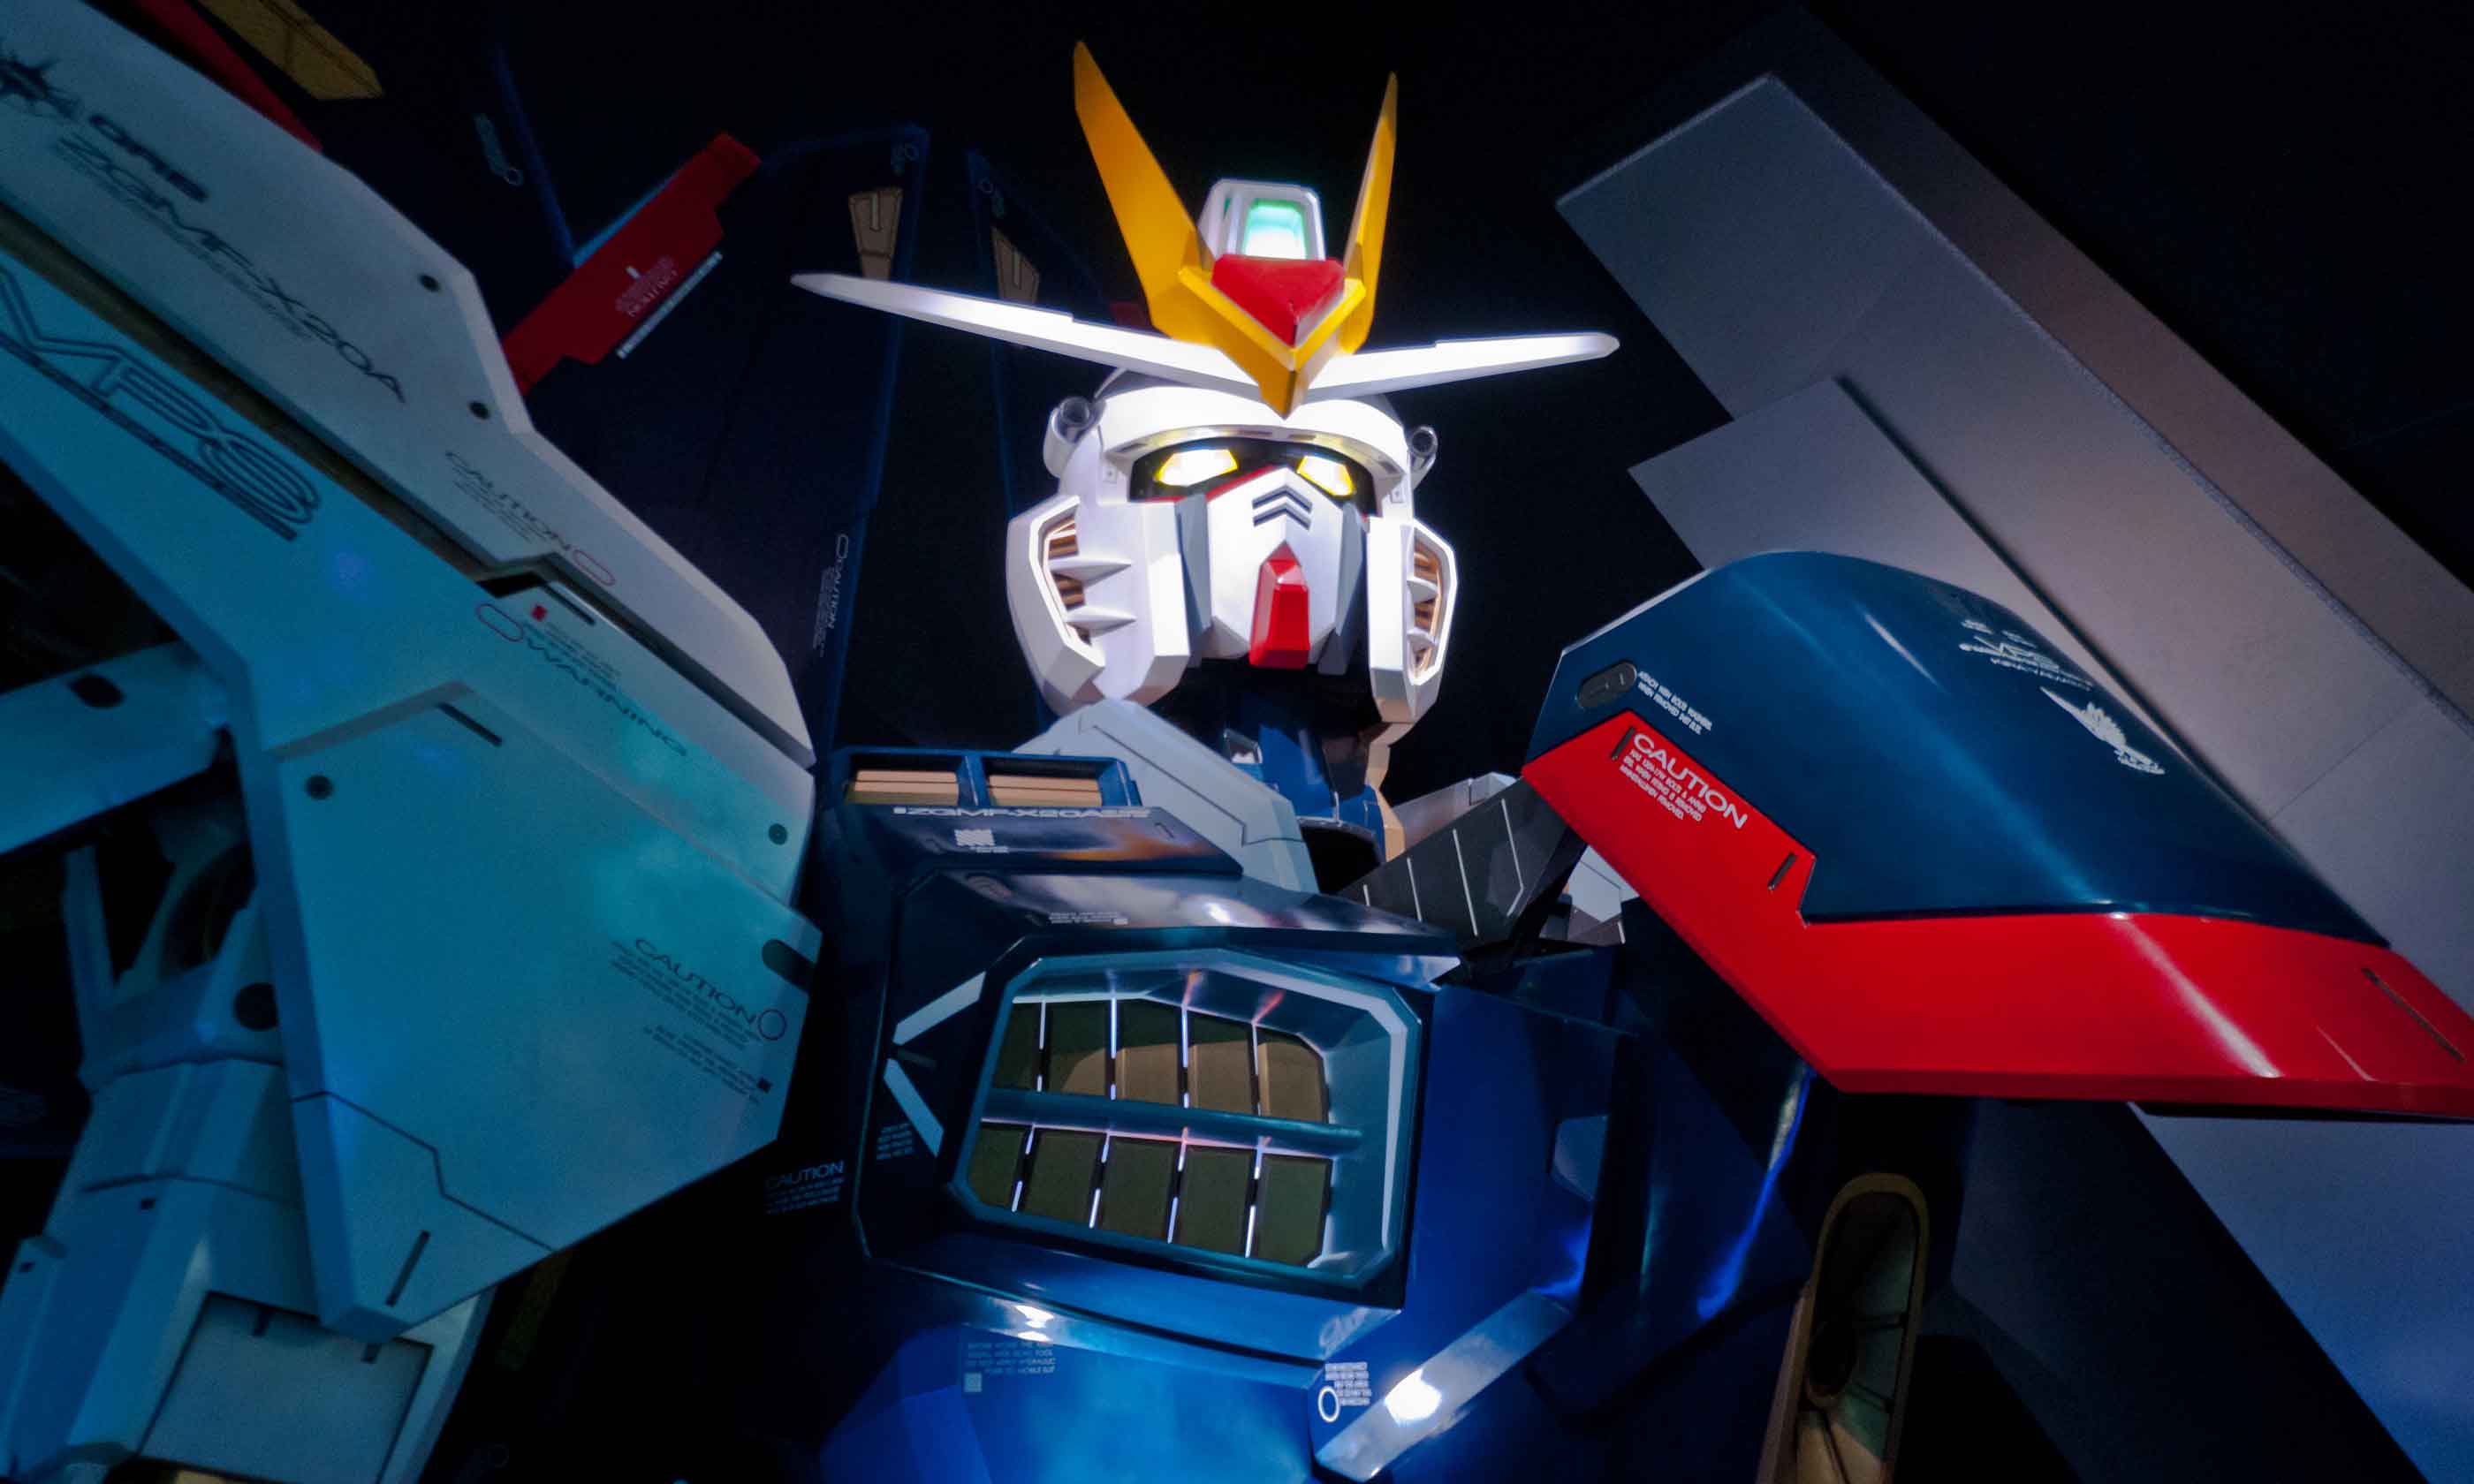 A life size Gundam (Shutterstock - see main image credit)